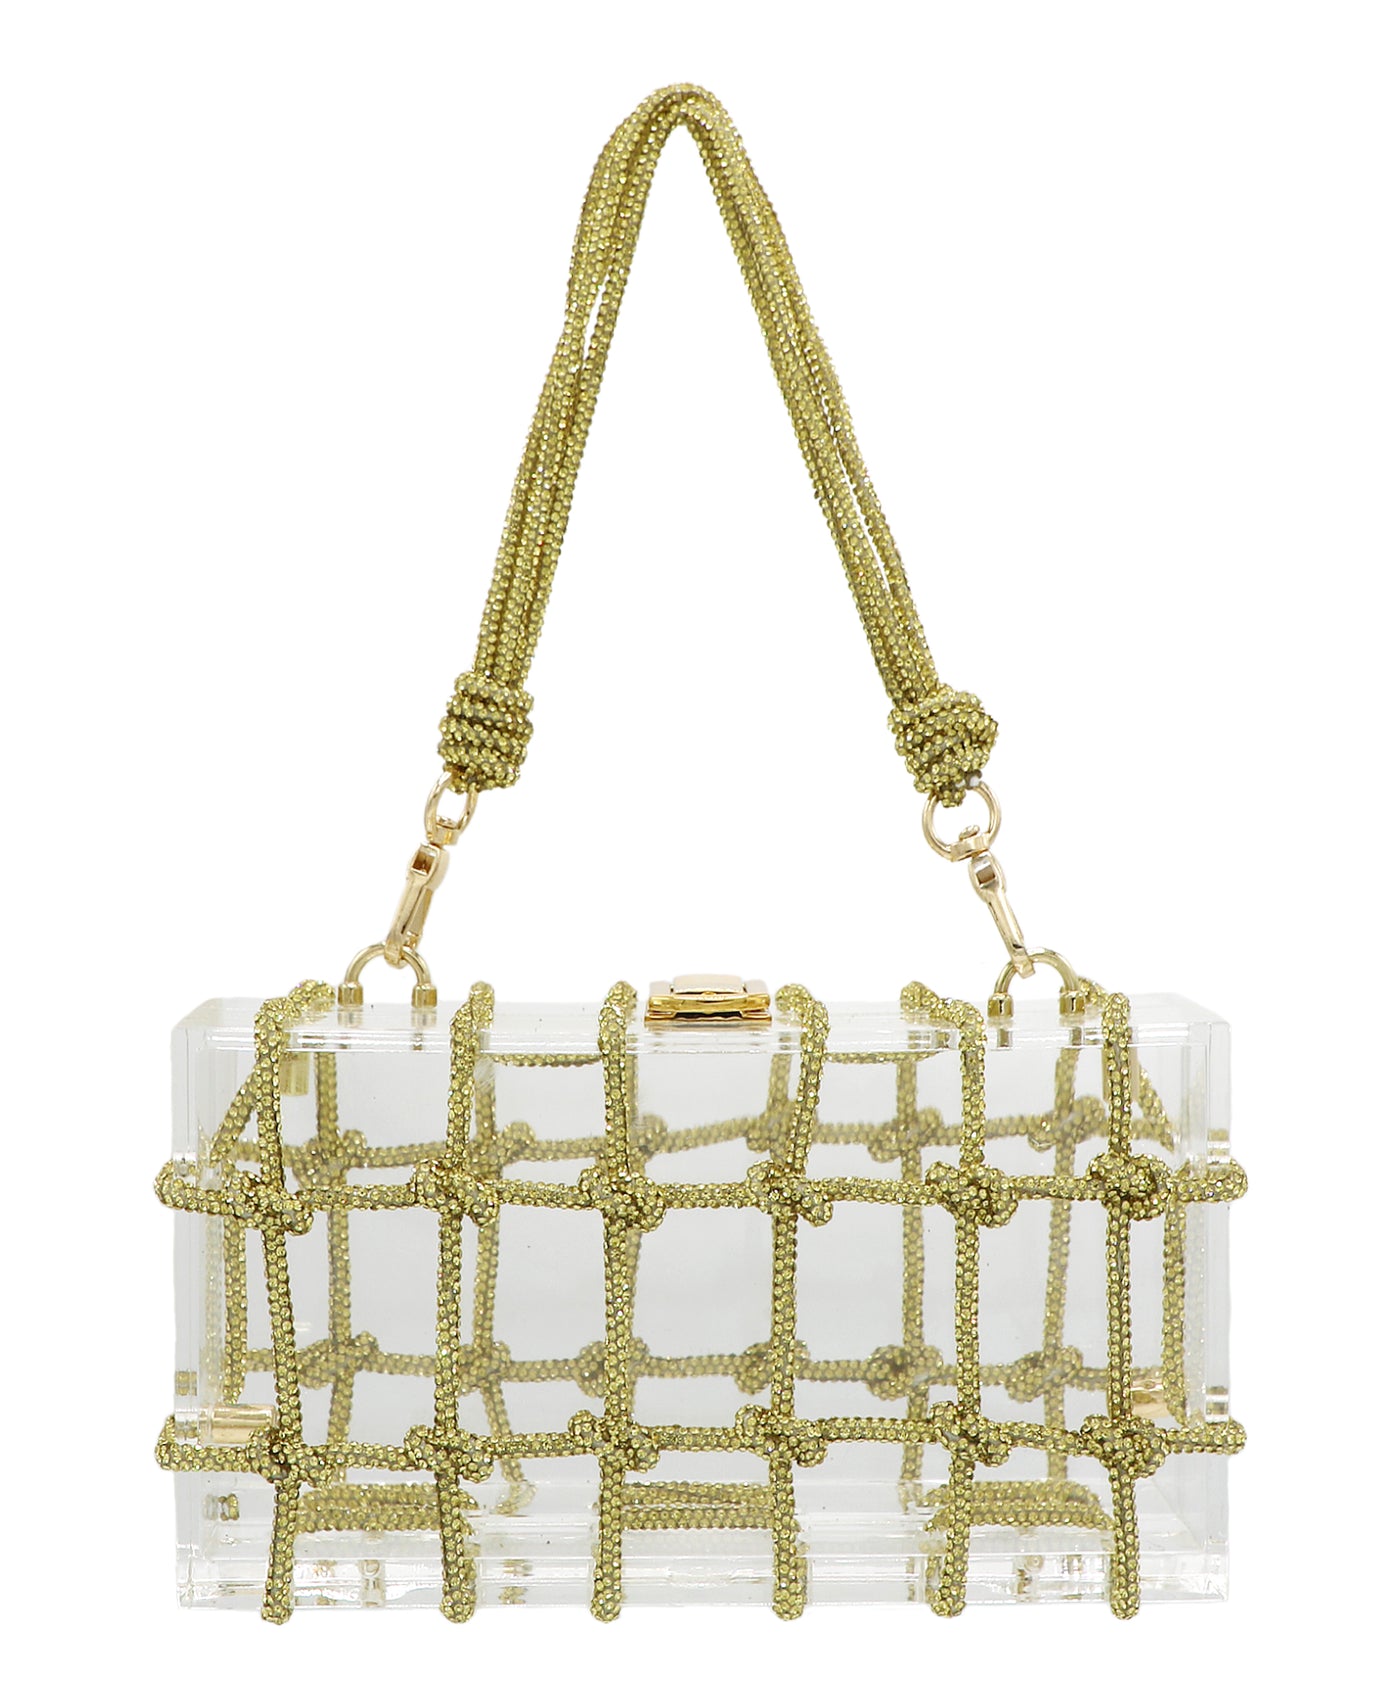 Acrylic Handbag w/ Rhinestone Detail & Strap image 1